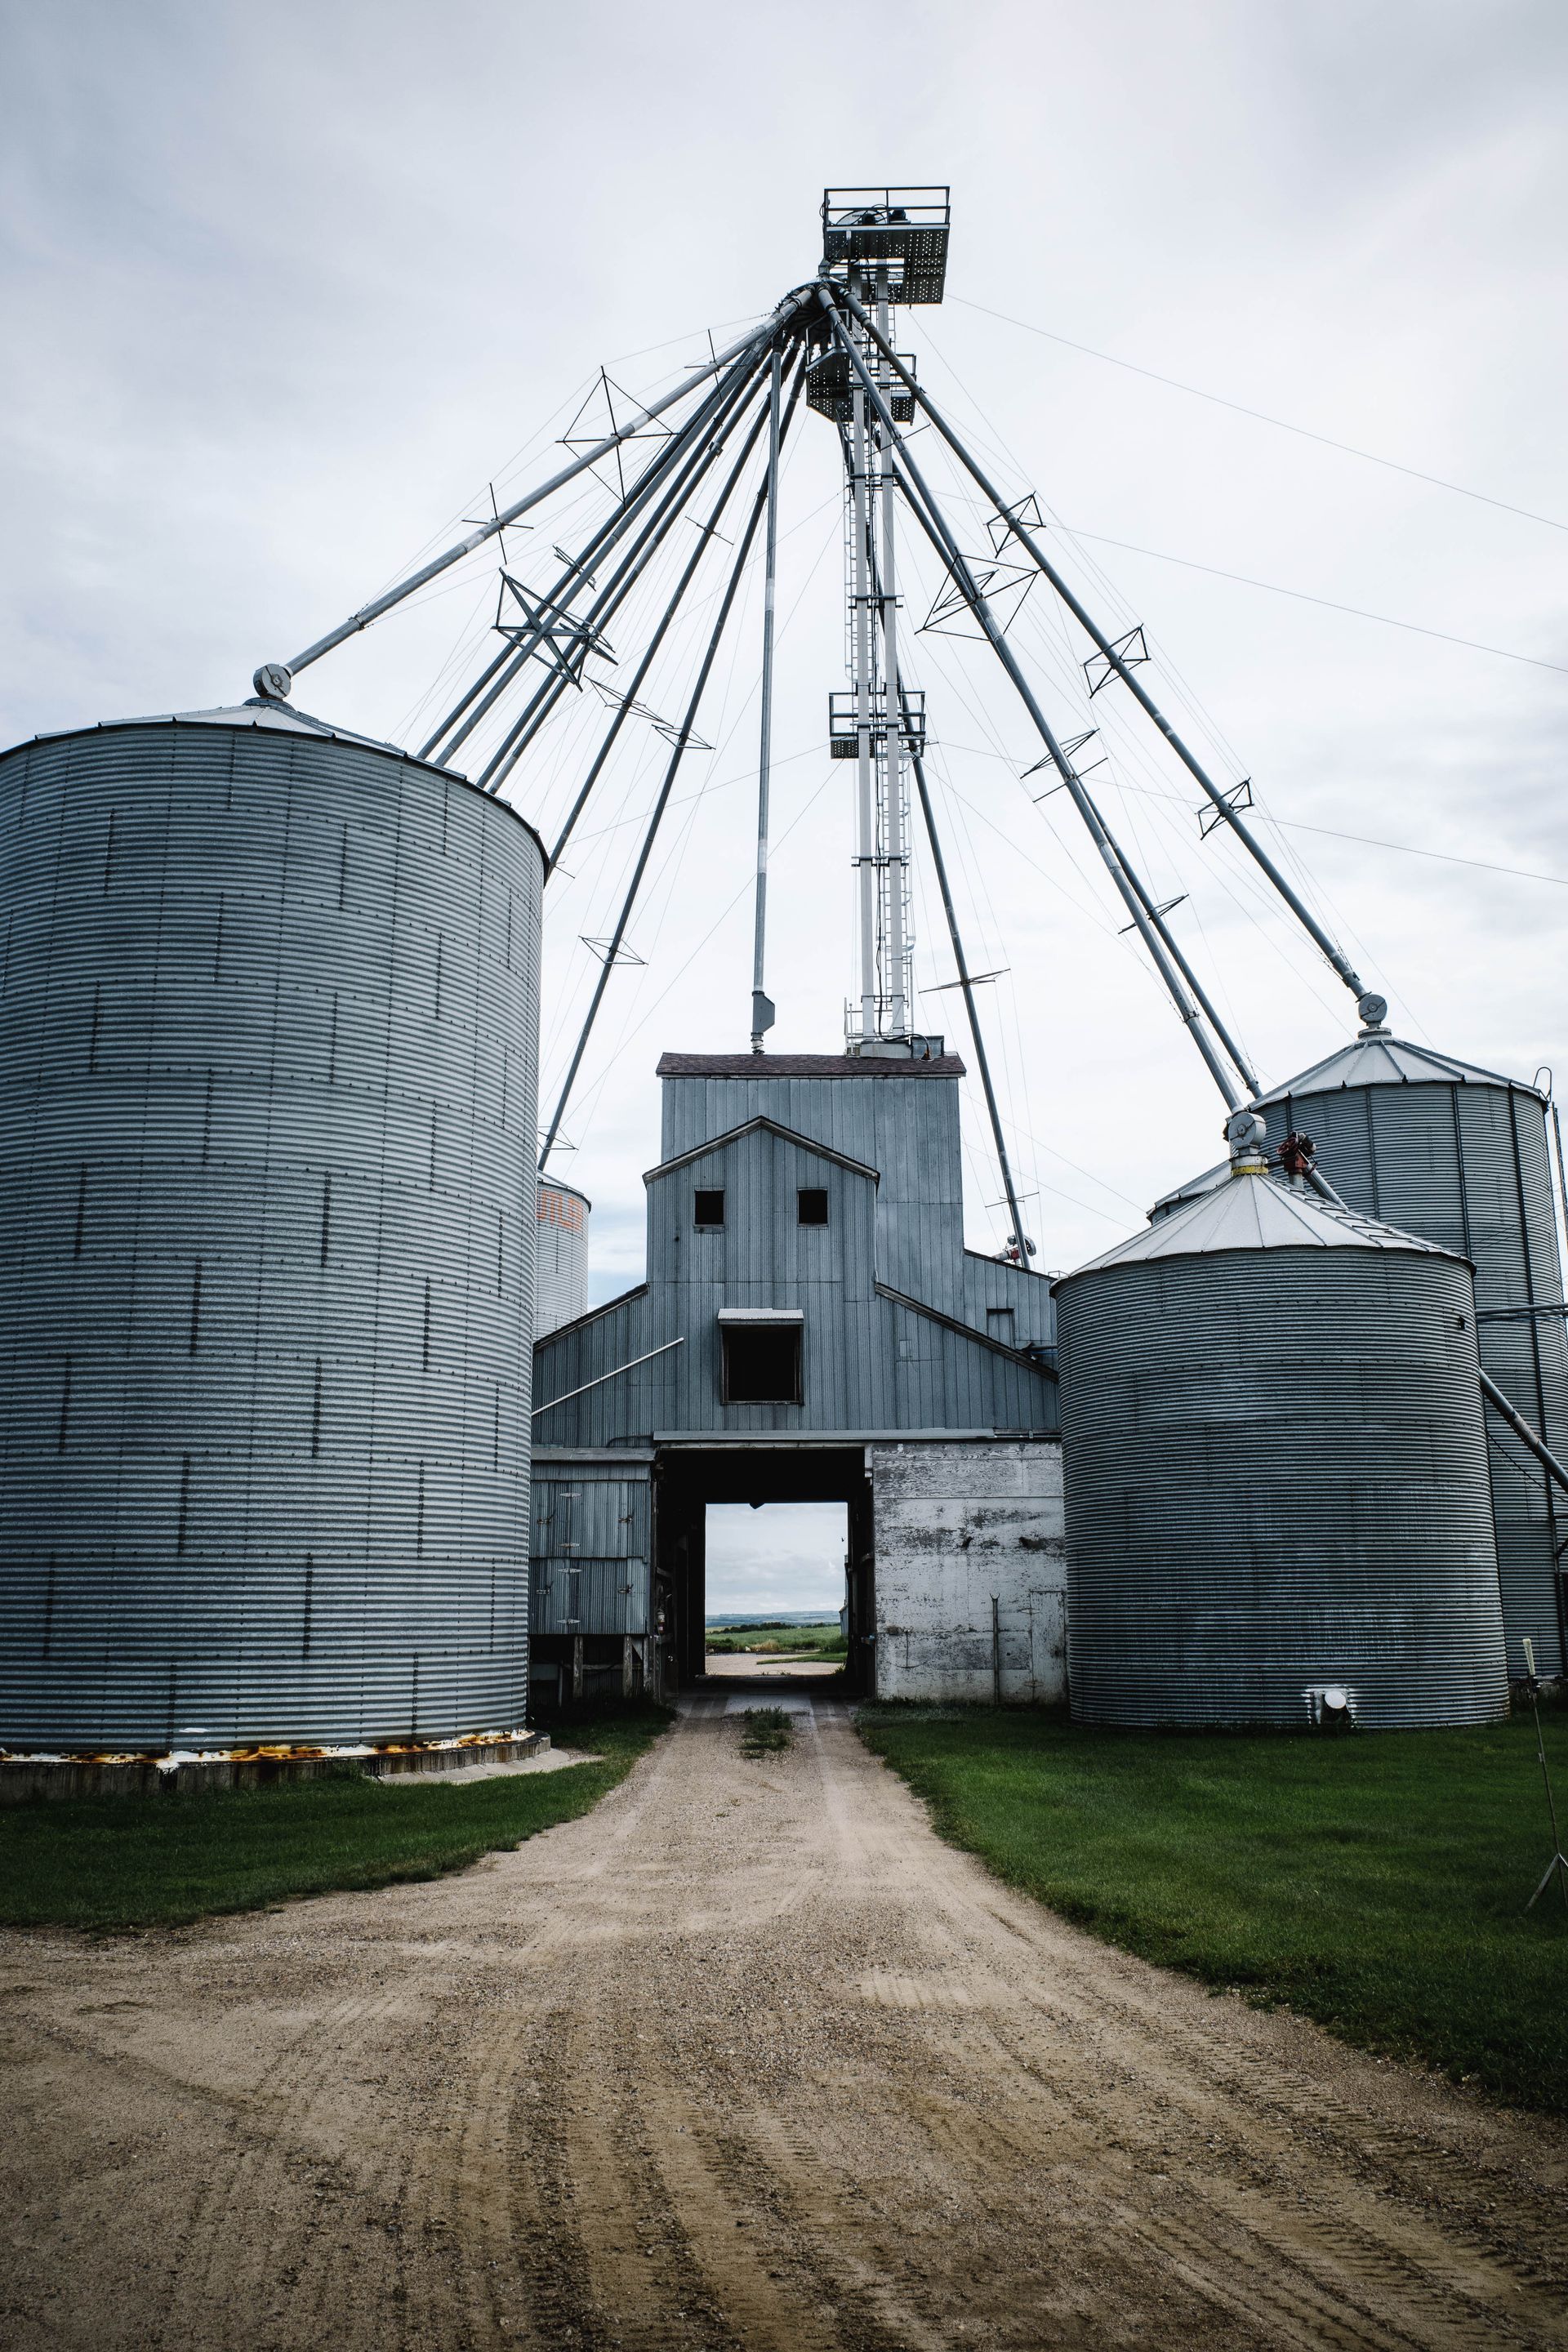 Grain elevators on Perkins Farm in Wainwright, Alberta